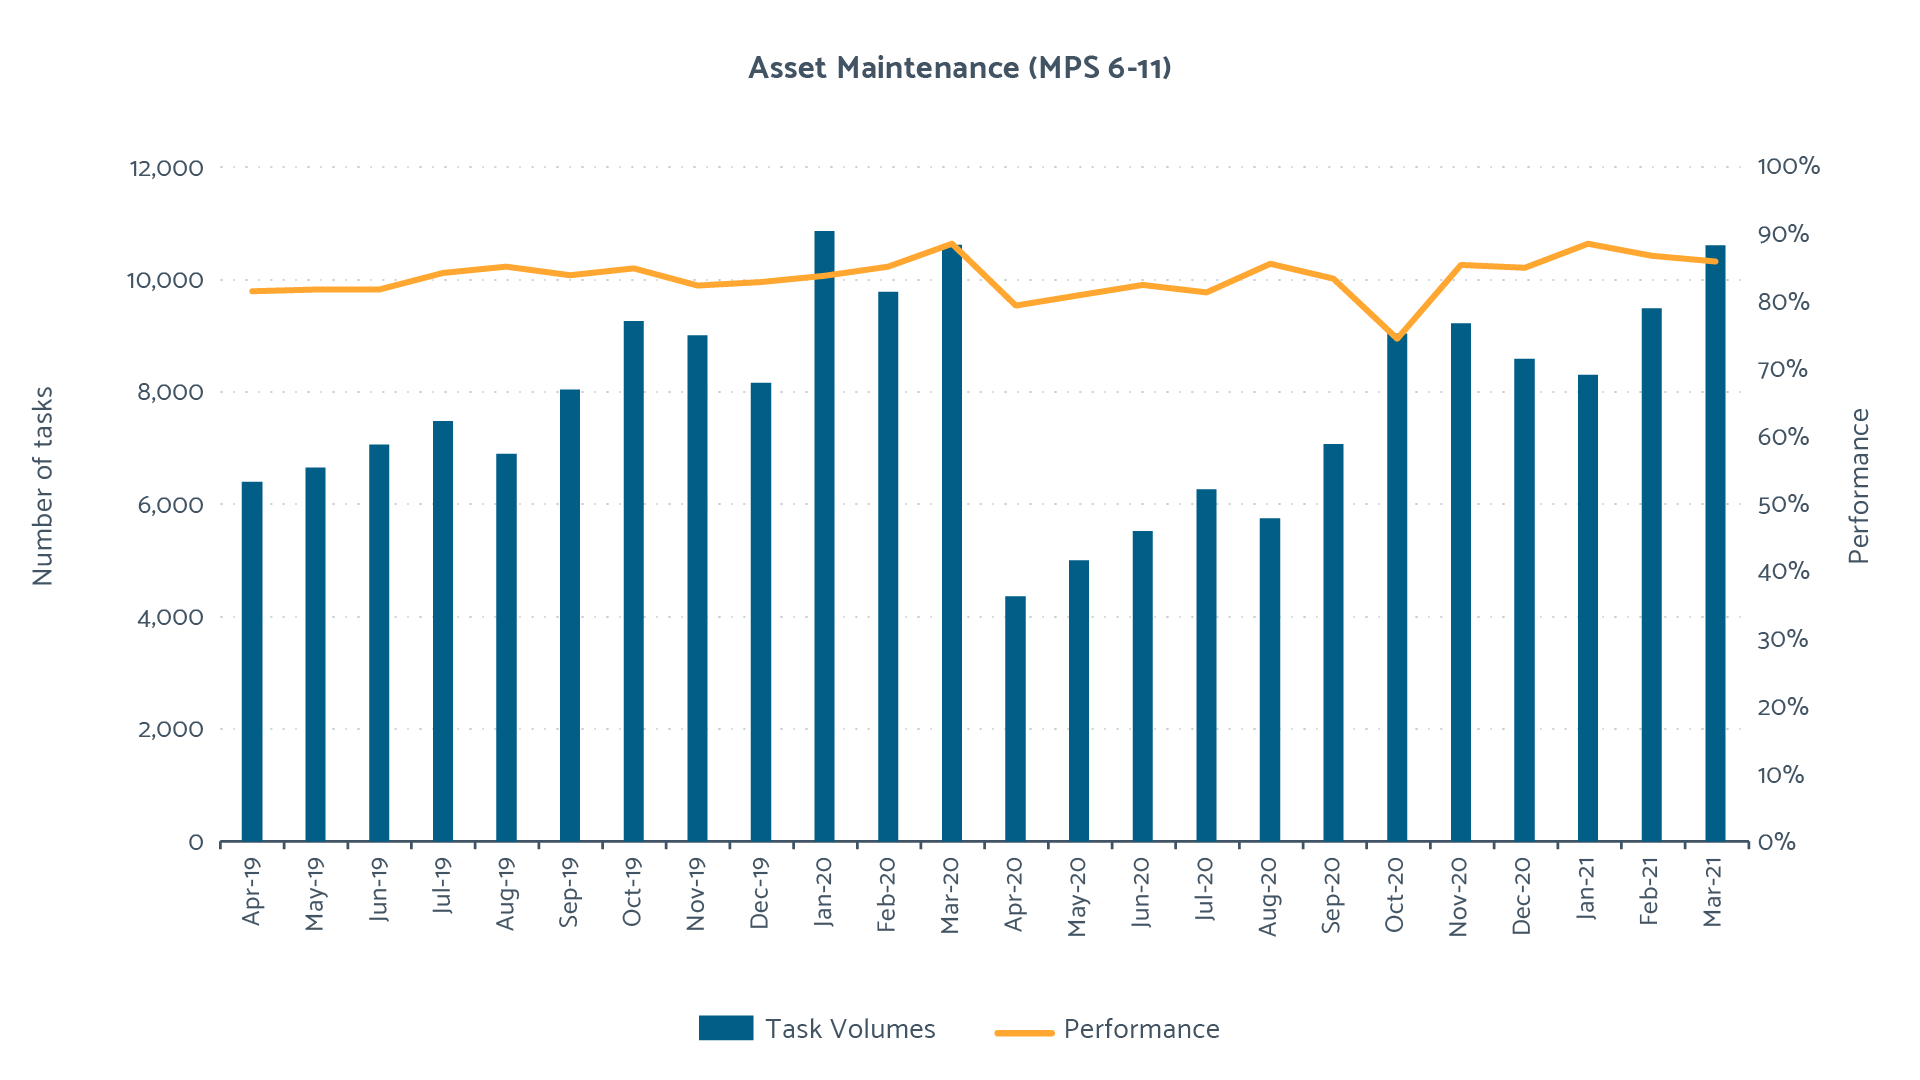 2020/21 Asset Maintenance Performance